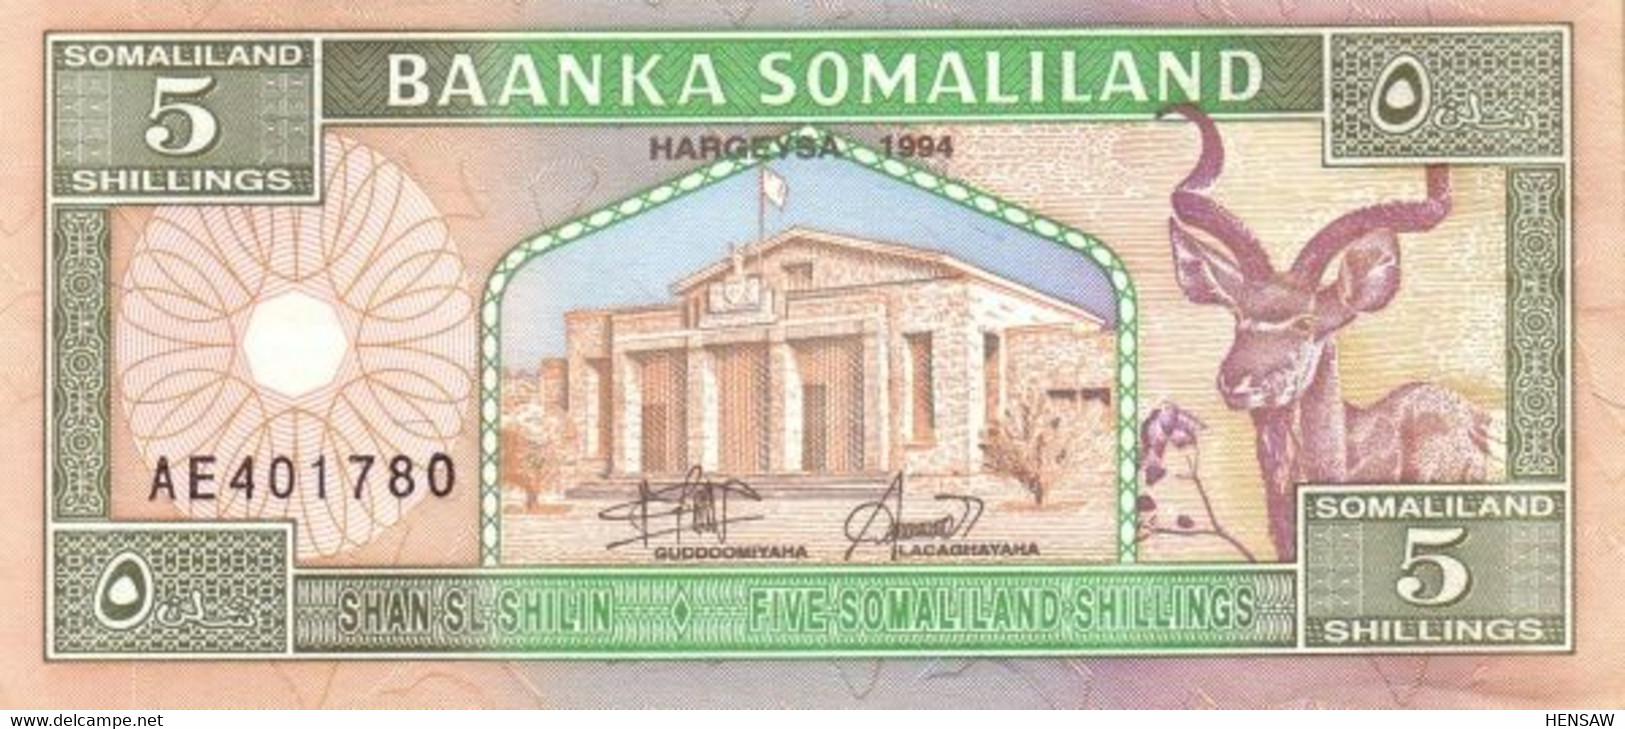 SOMALILAND 5 SHILLINGS 1994 P 1 UNC SC NUEVO - Somalie